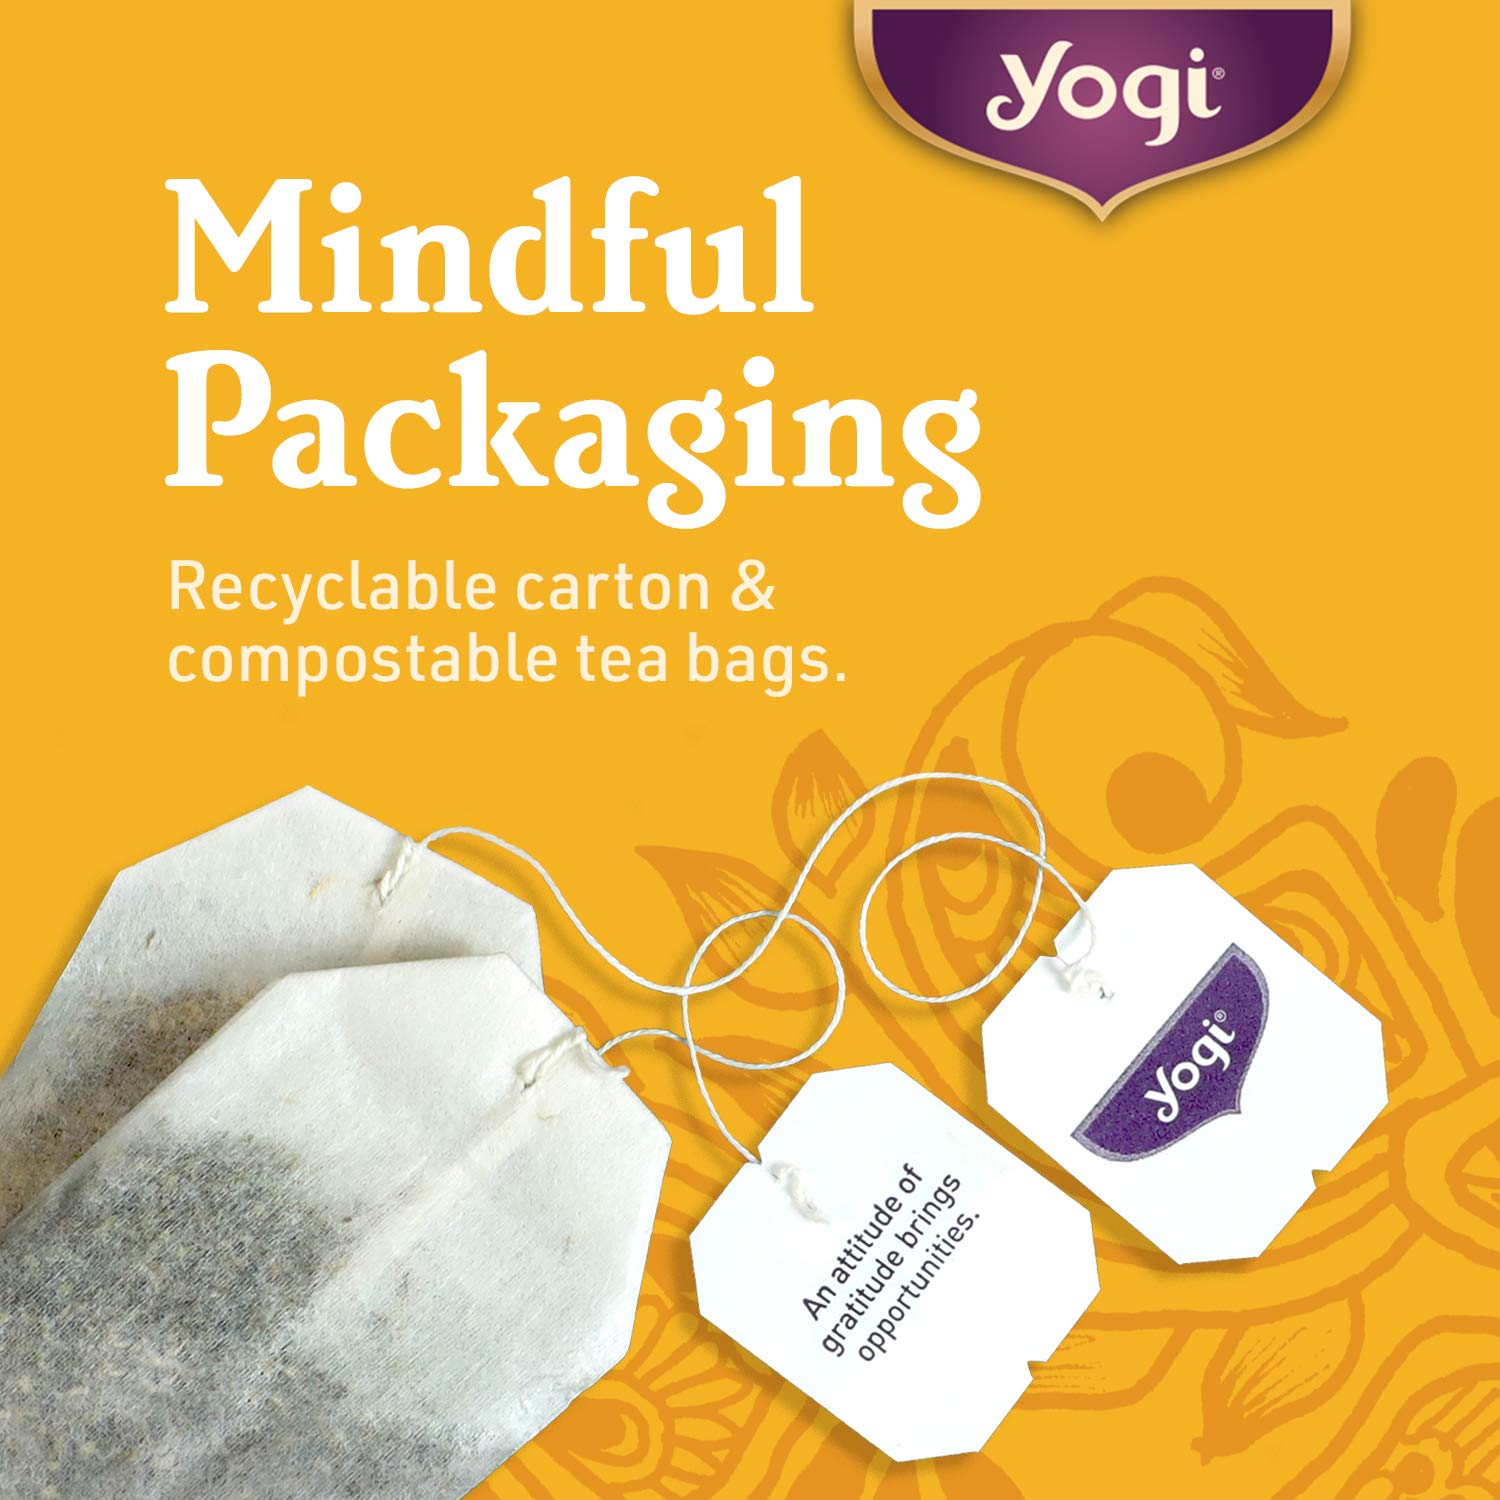 Yogi Tea Mango Ginger Tea - 16 Tea Bags per Pack (4 Packs) - Organic Ginger Root Tea to Support Healthy Digestion - Contains Antioxidants - Includes Cinnamon Bark, Rooibos Leaf, Mango Flavor & More